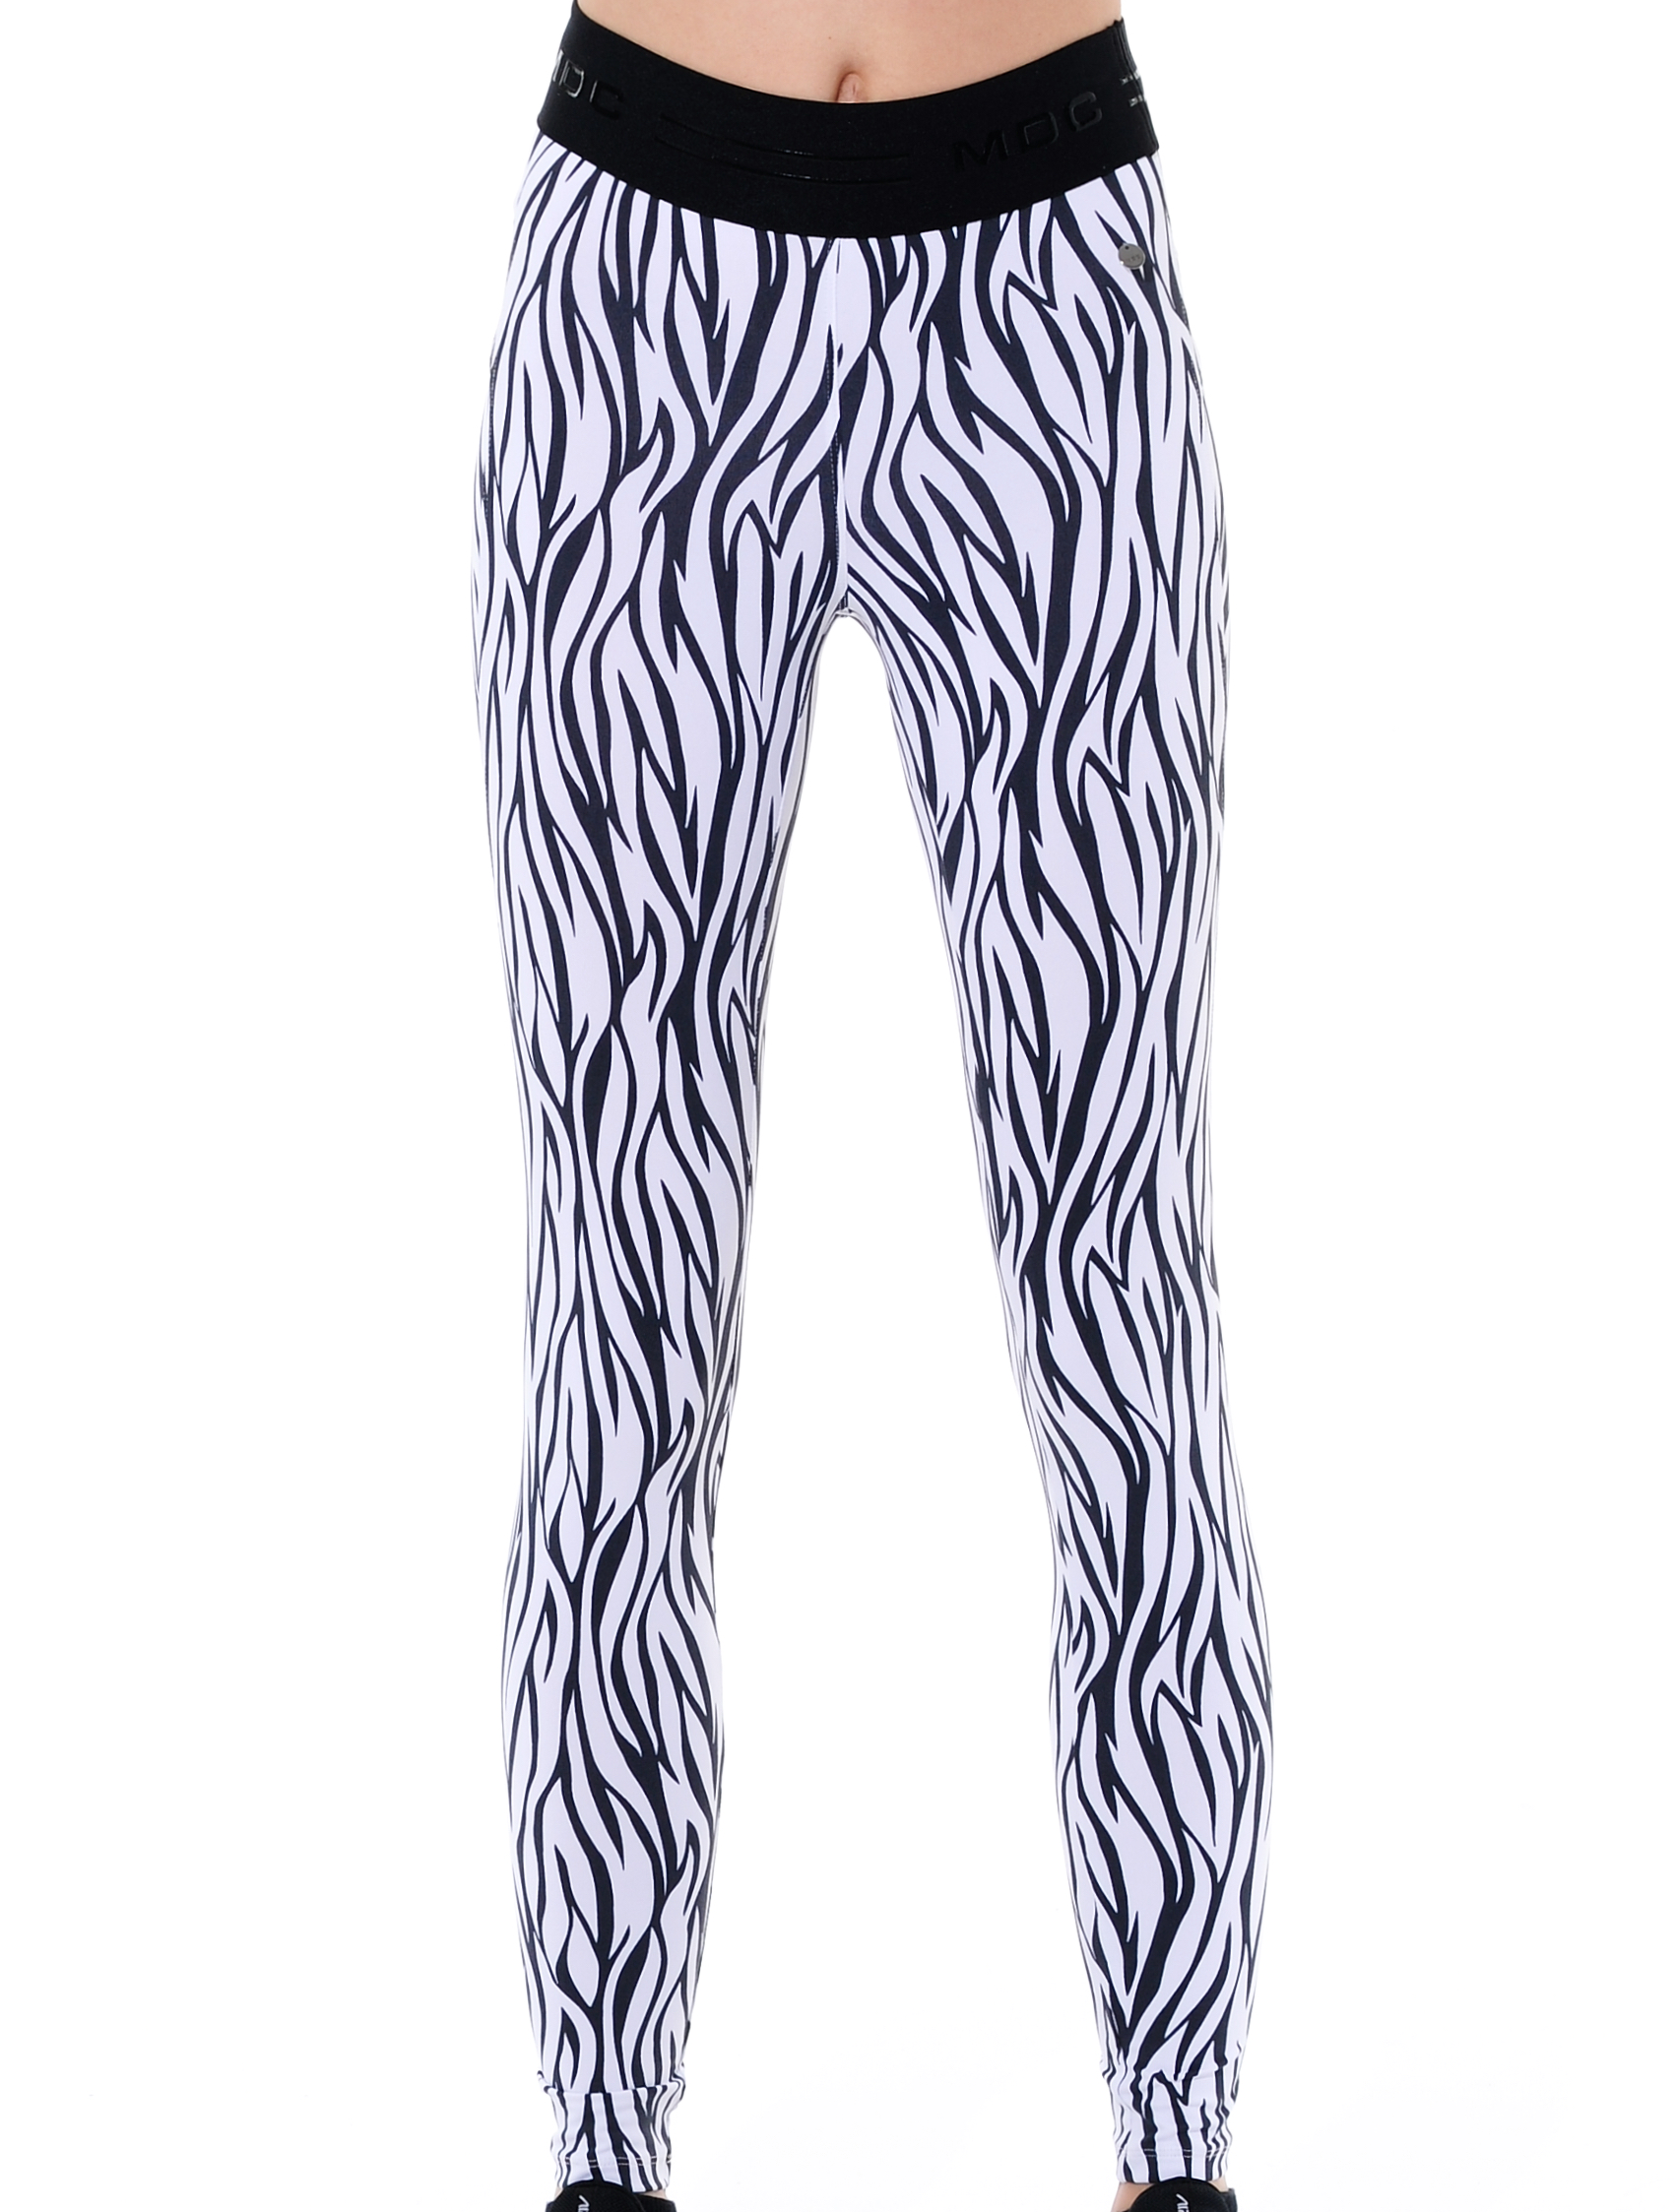 Zebra Skin print tights black/white 